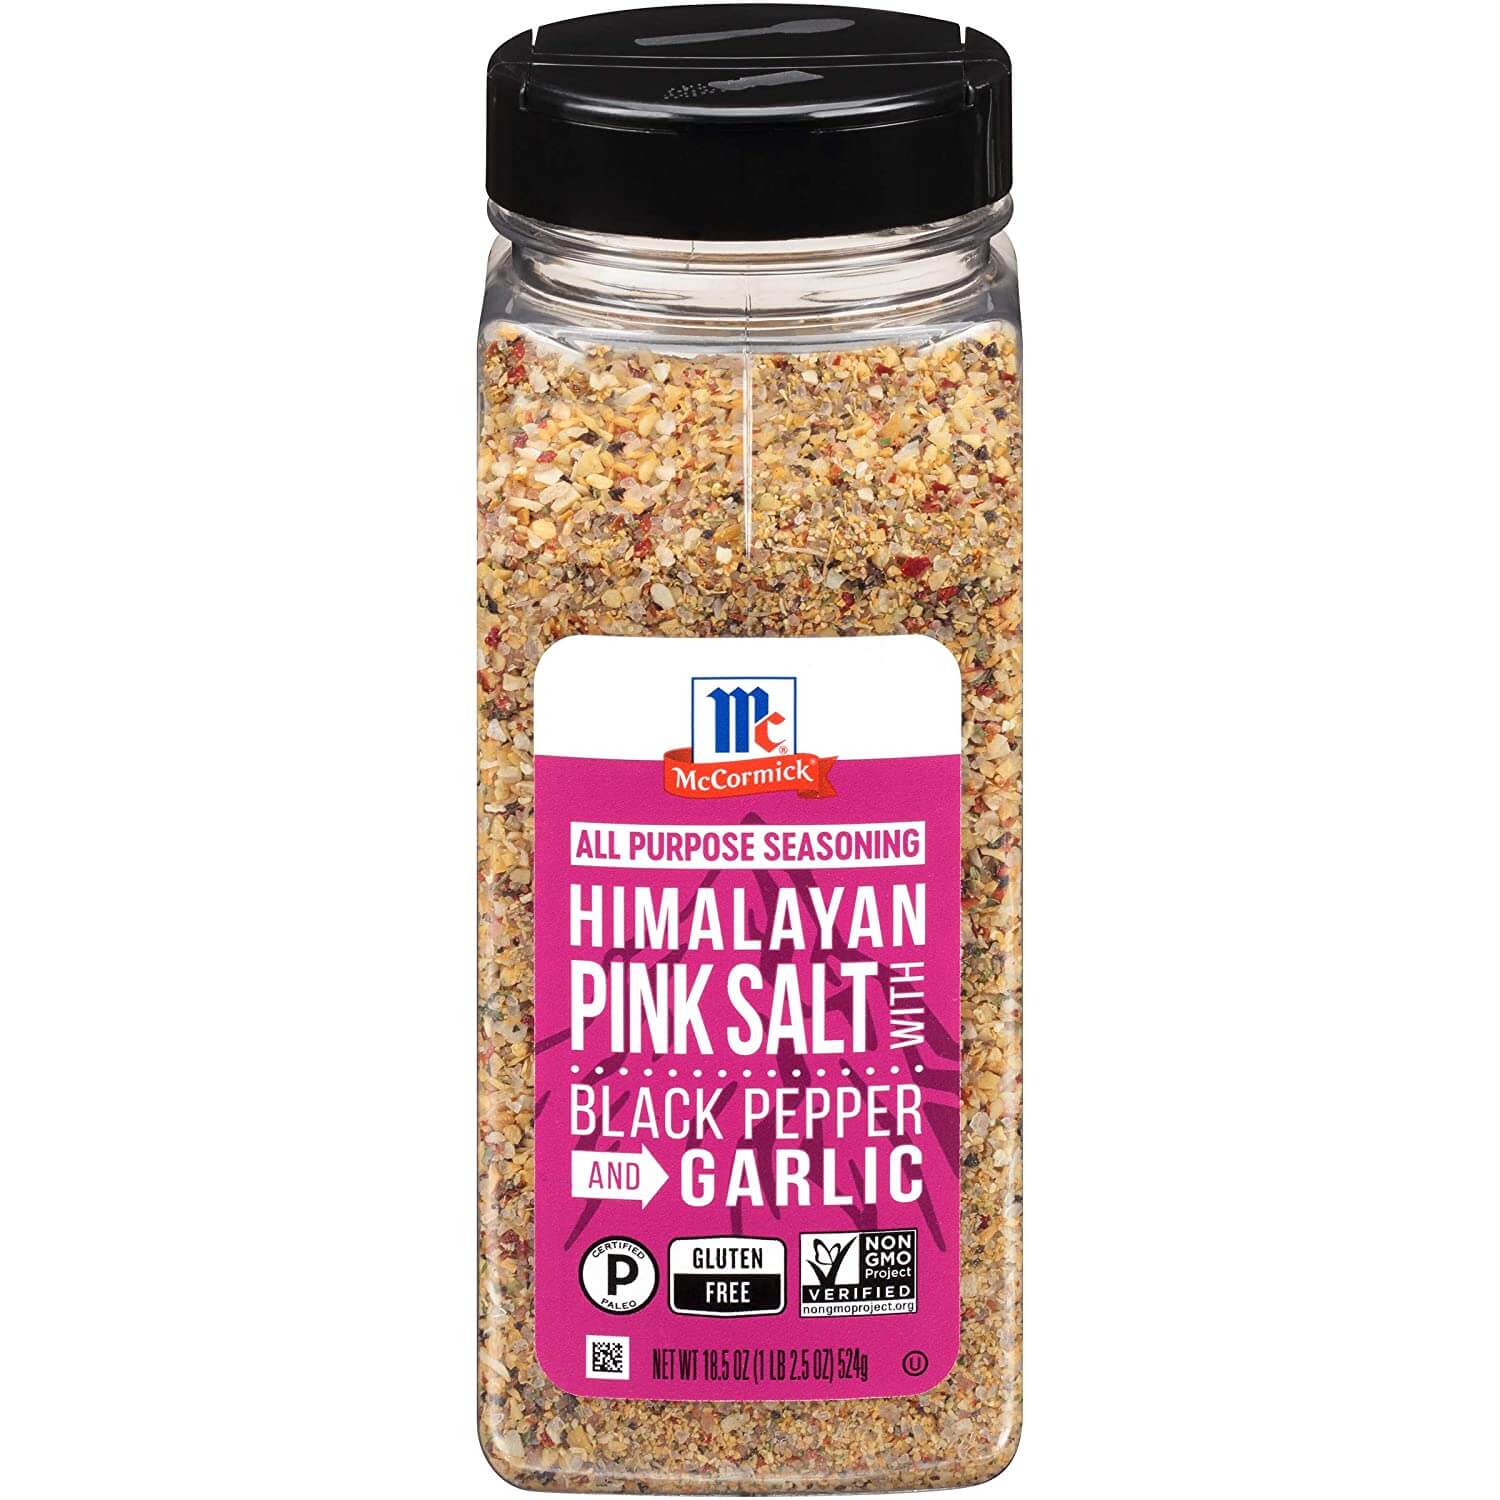 McCormick Himalayan Pink Salt with Black Pepper and Garlic All Purpose Seasoning